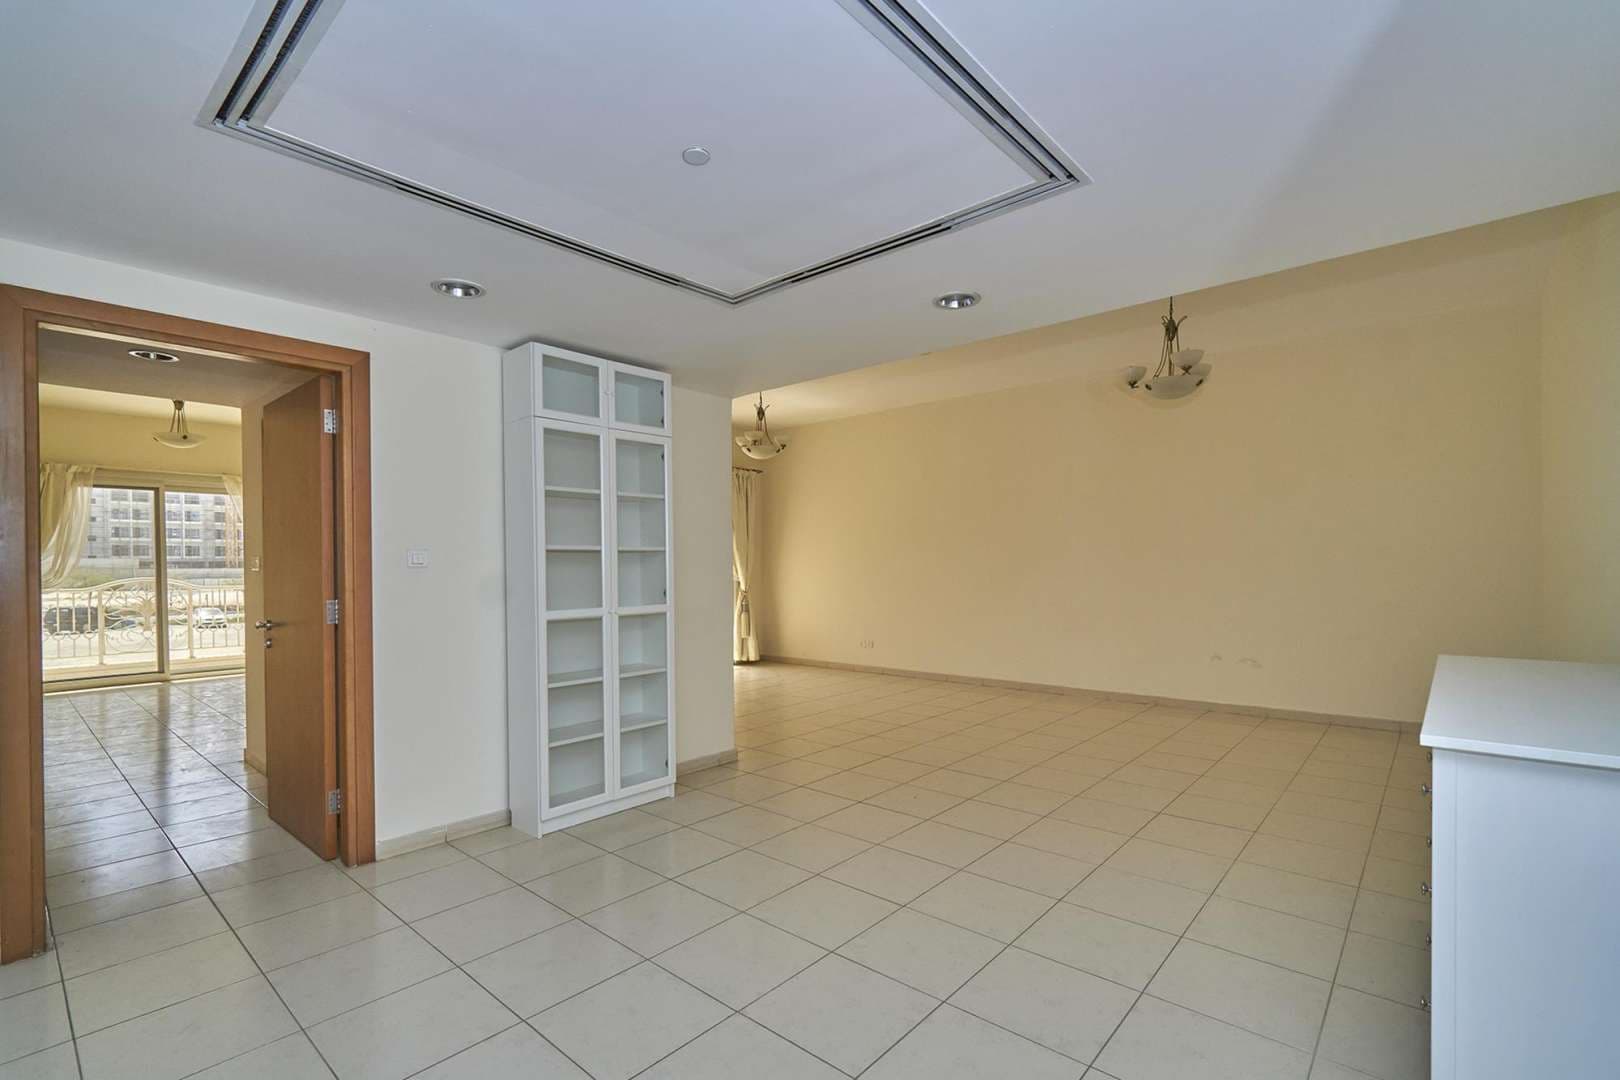 1 Bedroom Apartment For Rent Emirates Garden Lp06189 127aec98d3bfe300.jpg